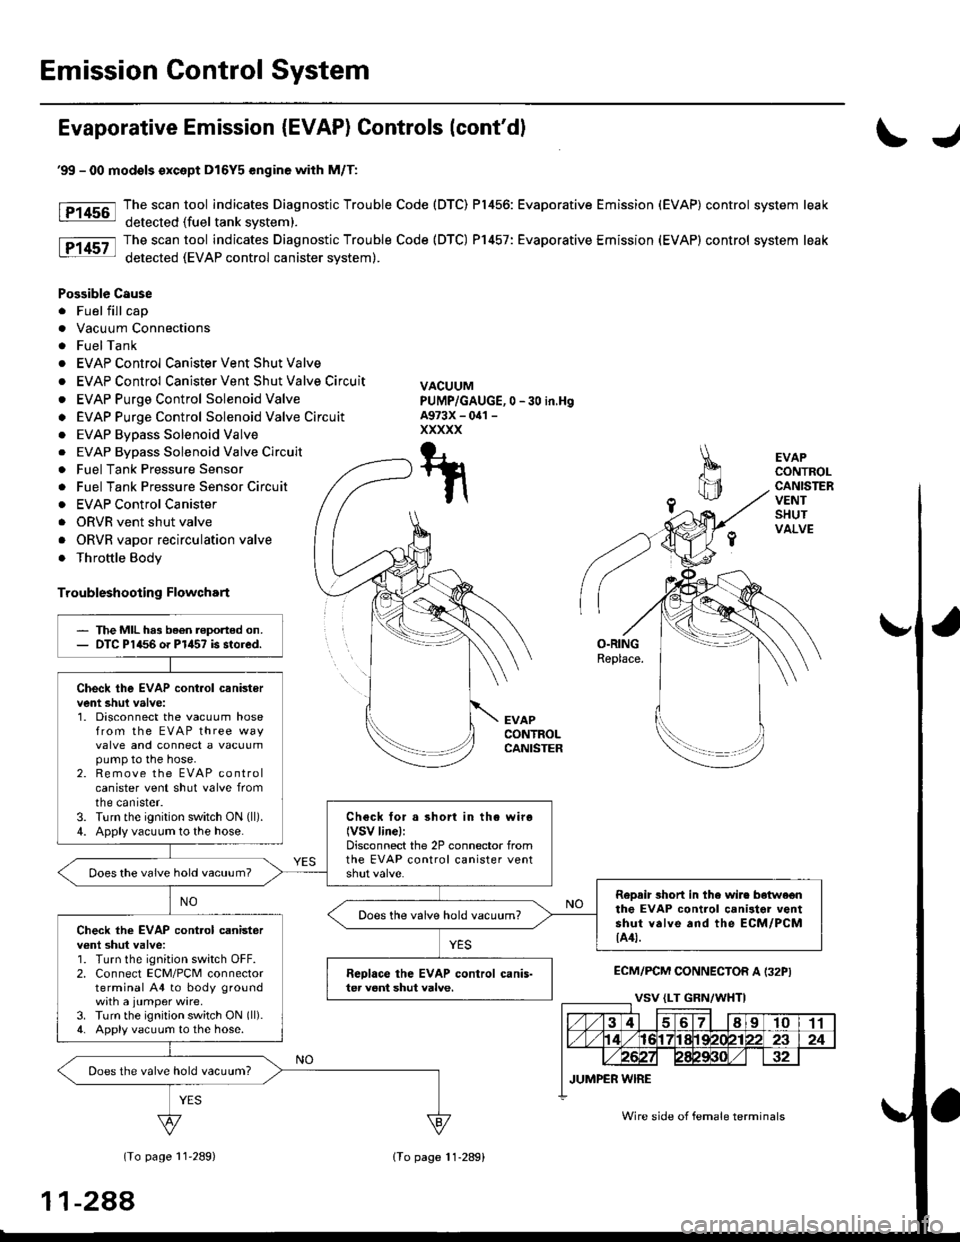 HONDA CIVIC 1999 6.G Workshop Manual Emission Control System
Evaporative Emission {EVAP) Controls (contdl
\J
tF1456-l
tP14sz-l
EVAPCONTROLCANISTERVENTSHUTVALVE
O.RINGReplace.
EVAPCONTROLCANISTER
ECM/PCM CONNECTOR A I32PI
(To page 11289